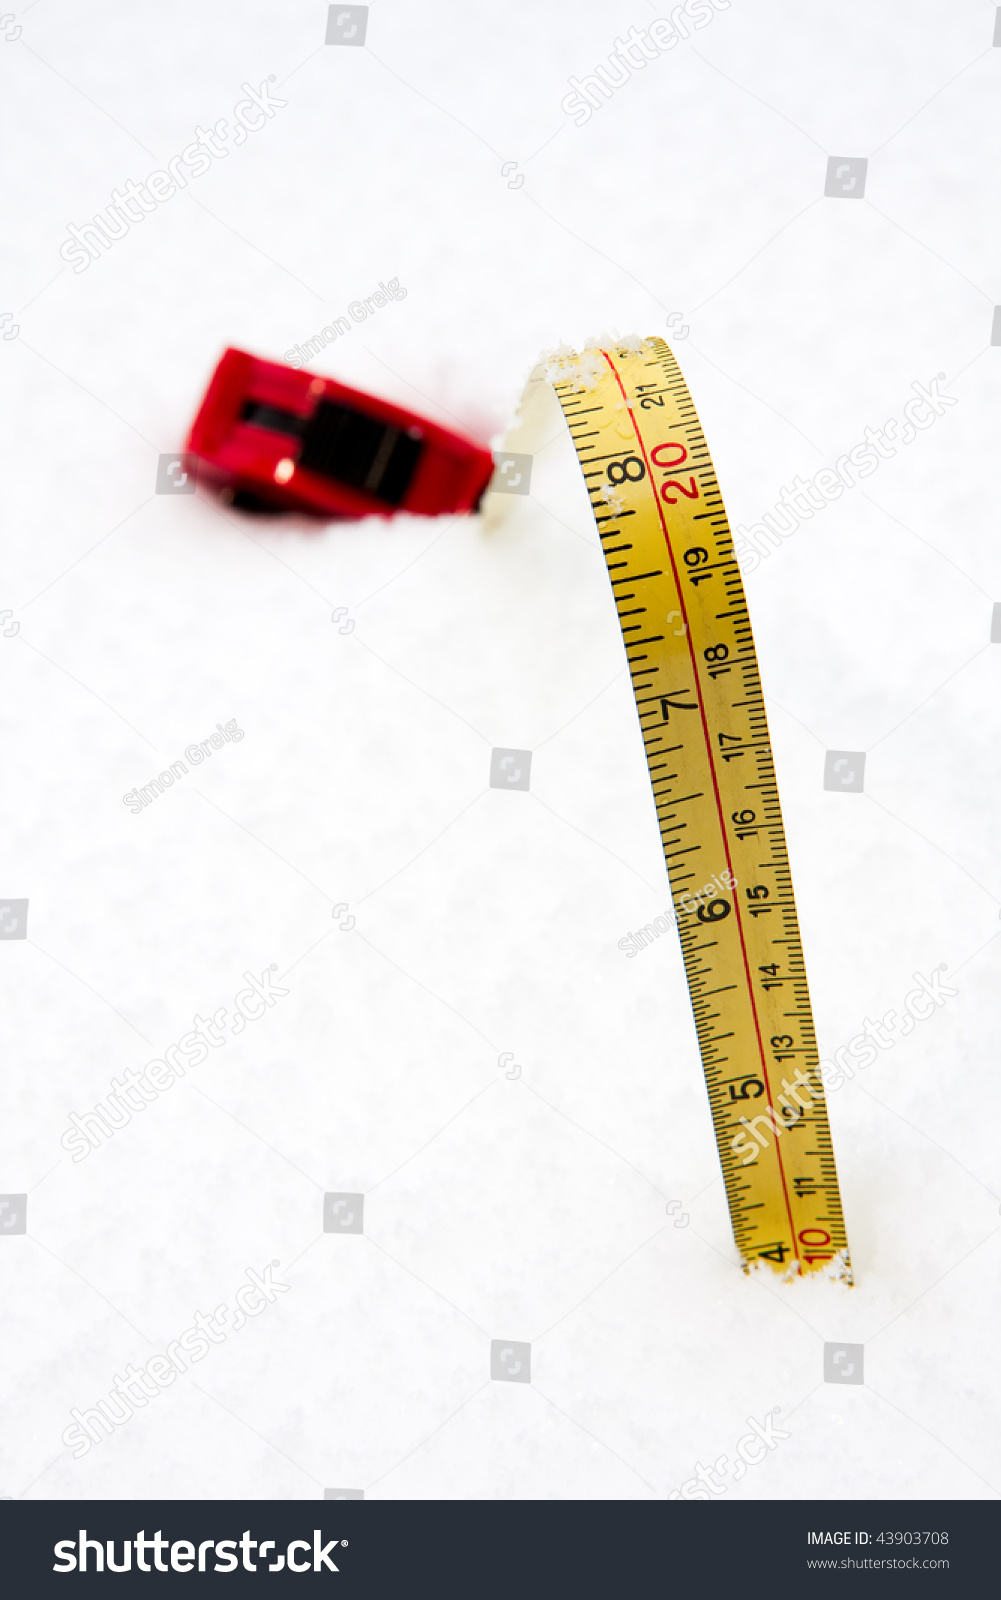 Measuring Tape Showing Snow Depth 10cm Stock Photo Edit Now 43903708